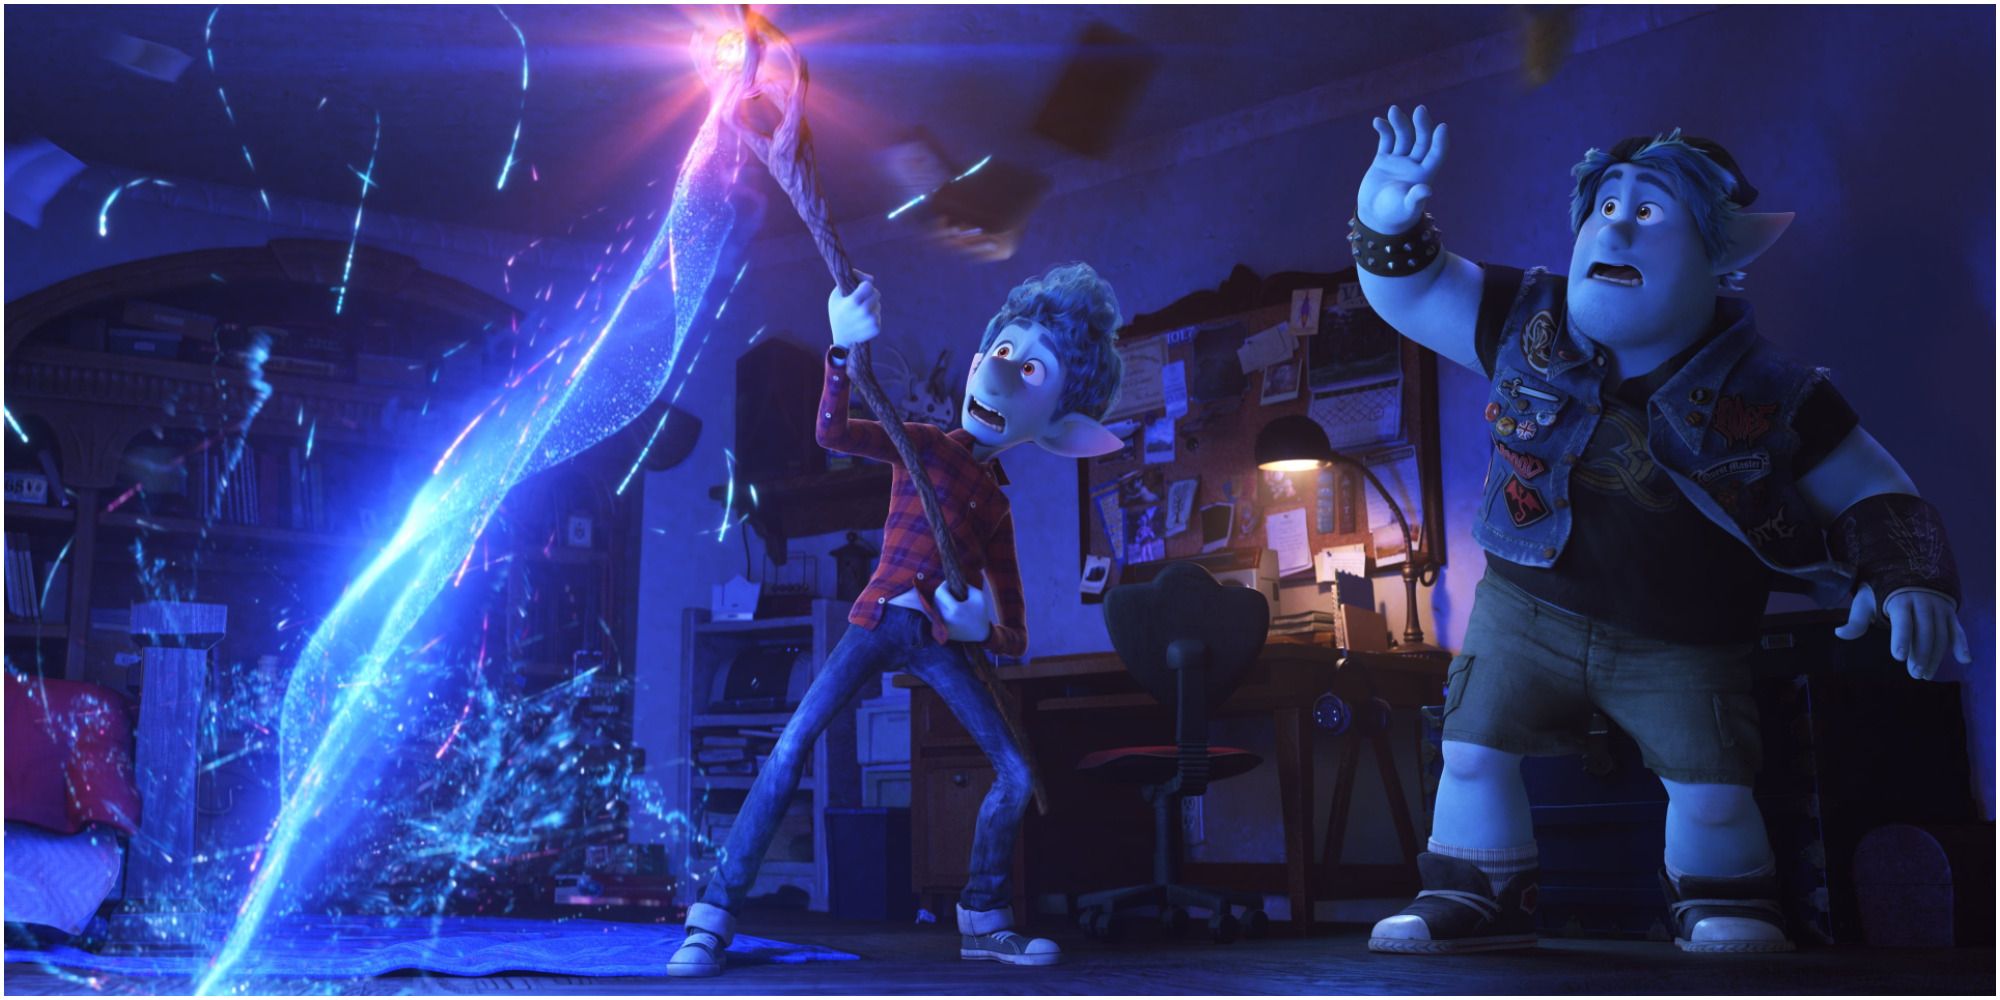 Tom Holland and Chris Pratt star as Ian and Barley Lightfoot in Pixar's Onward